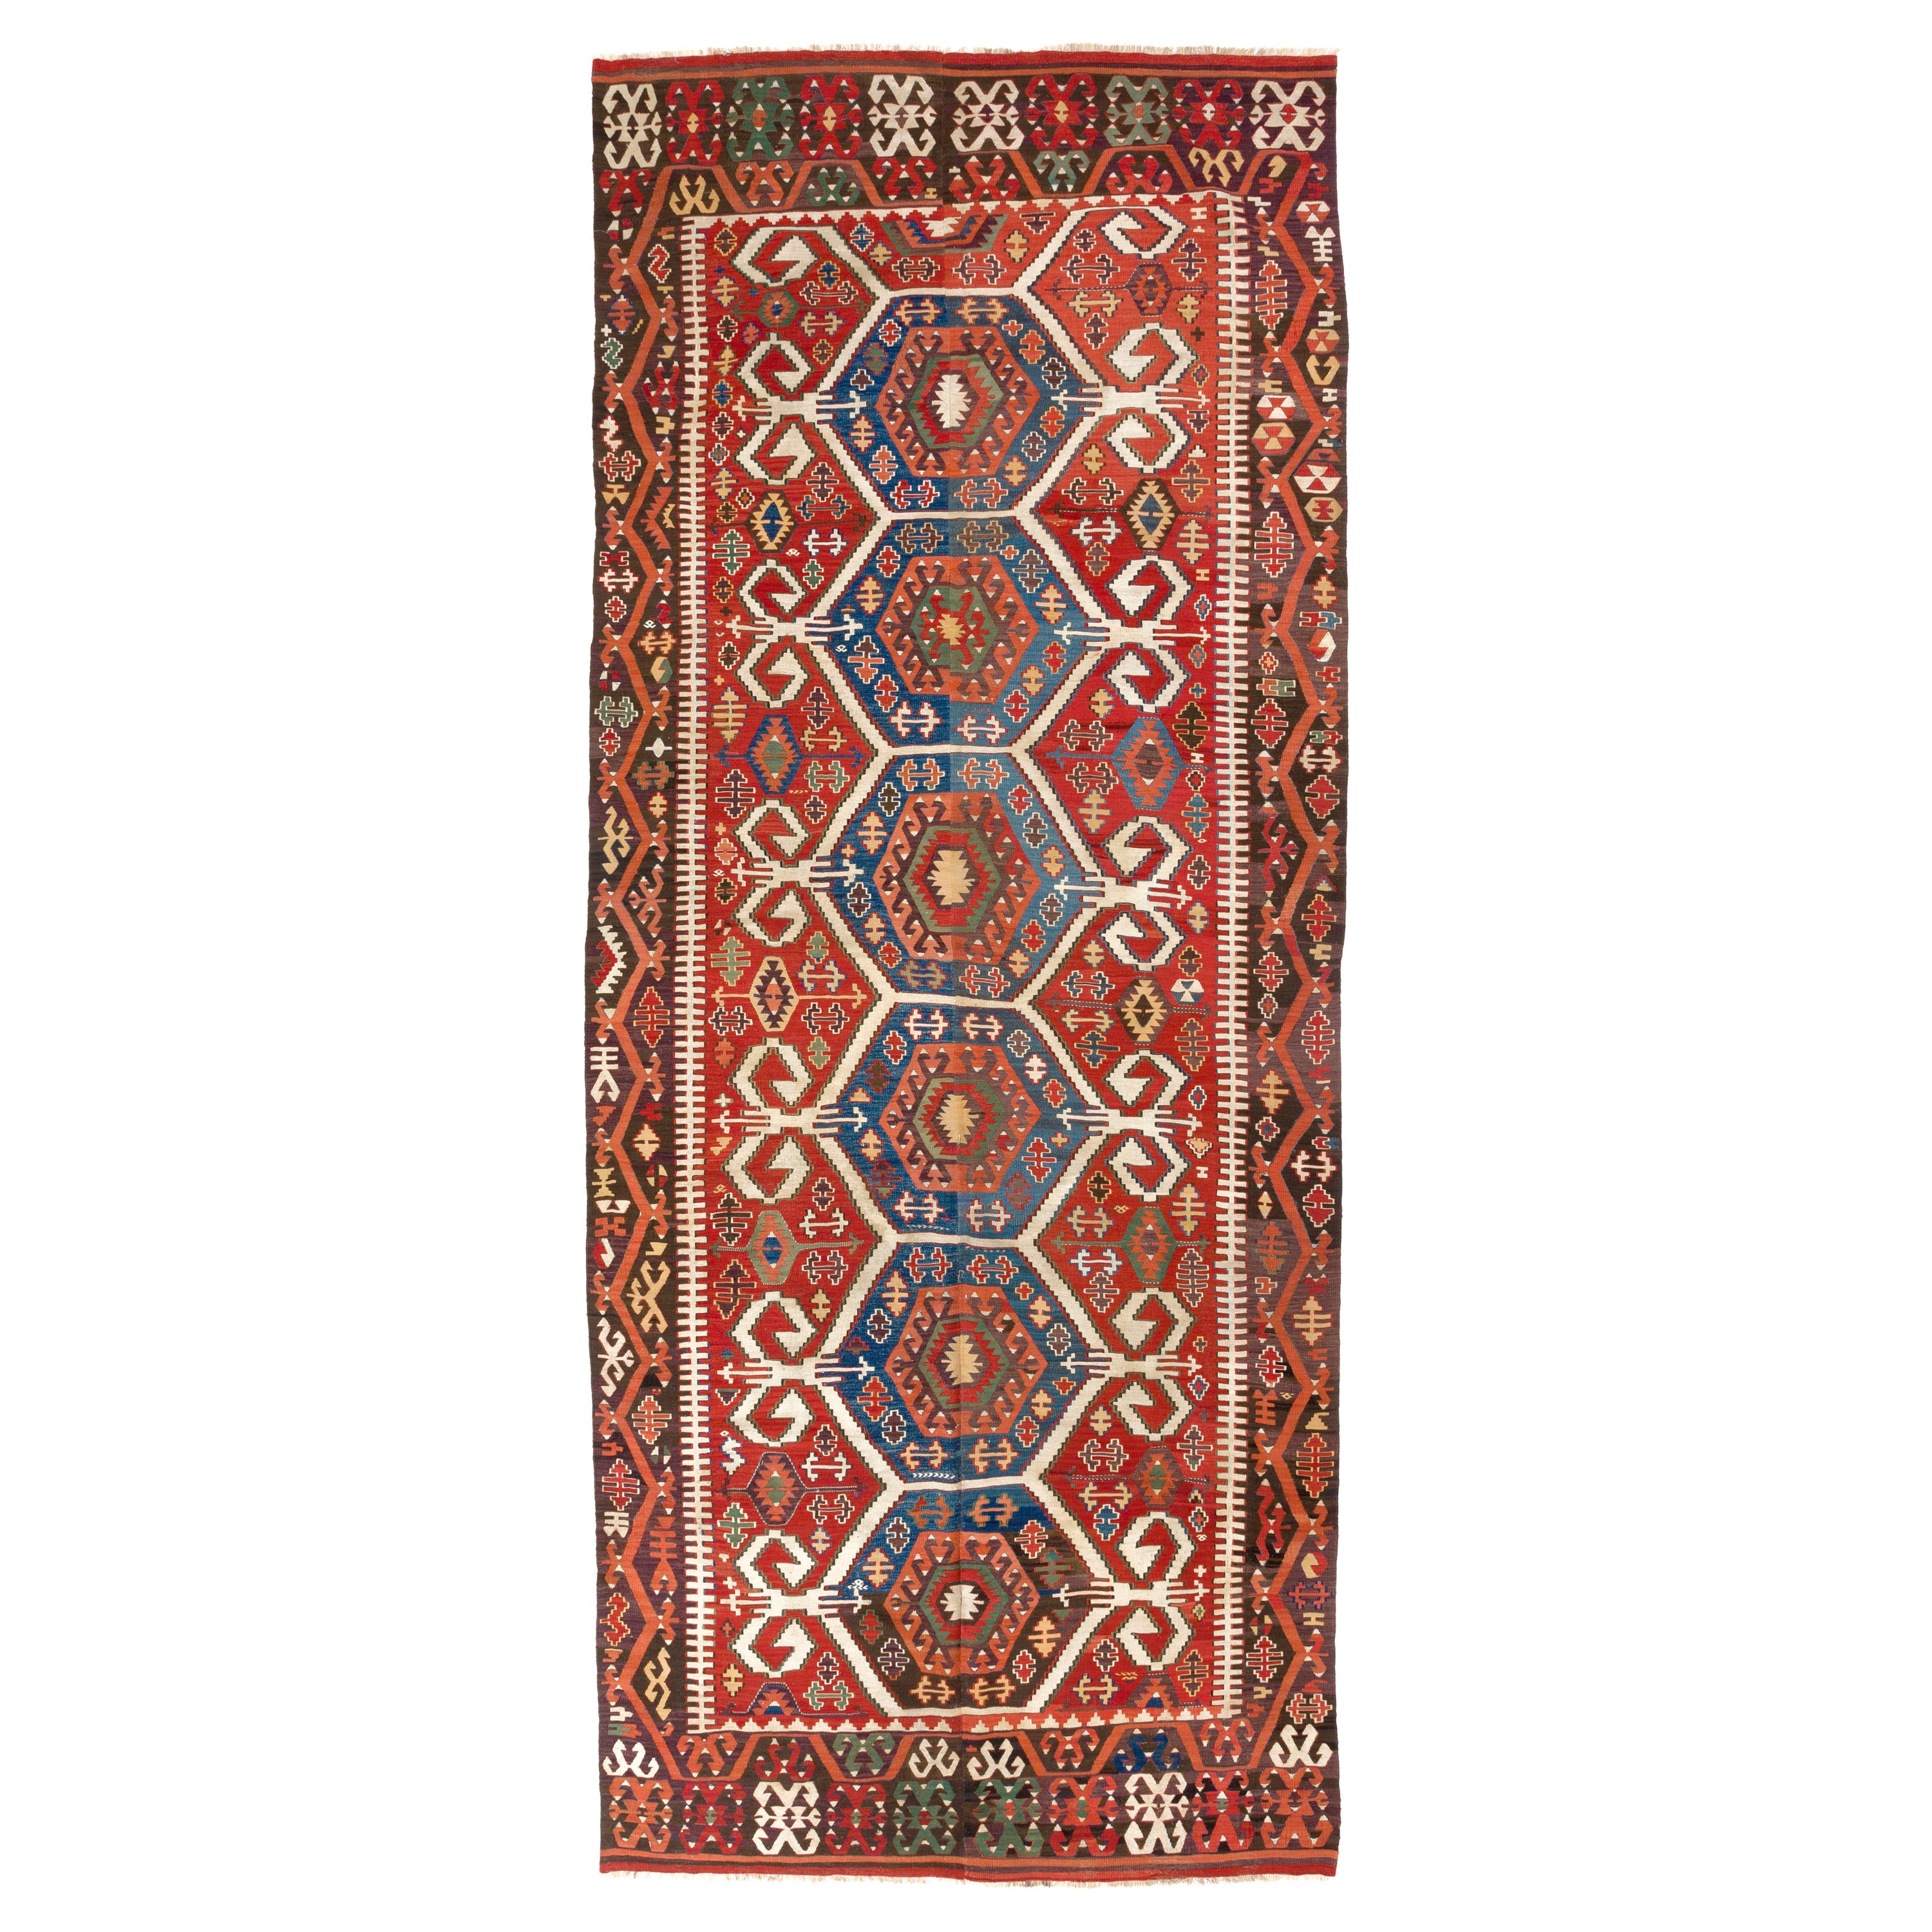 5.6x13.5 Ft Antique Anatolian Konya Kilim, Ca 1880, Flat-Weave Rug